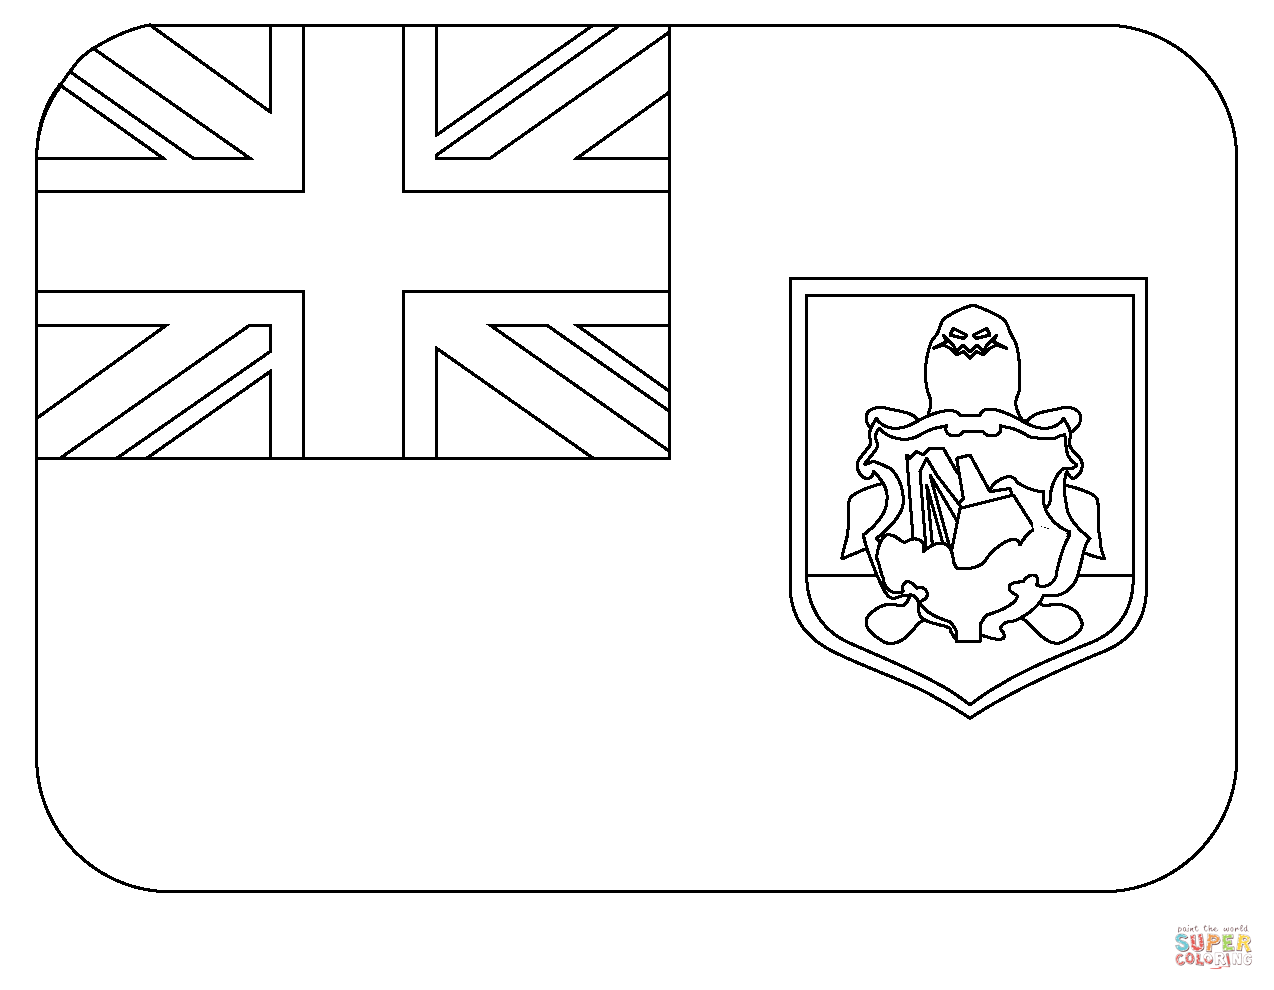 Flag of bermuda emoji coloring page free printable coloring pages